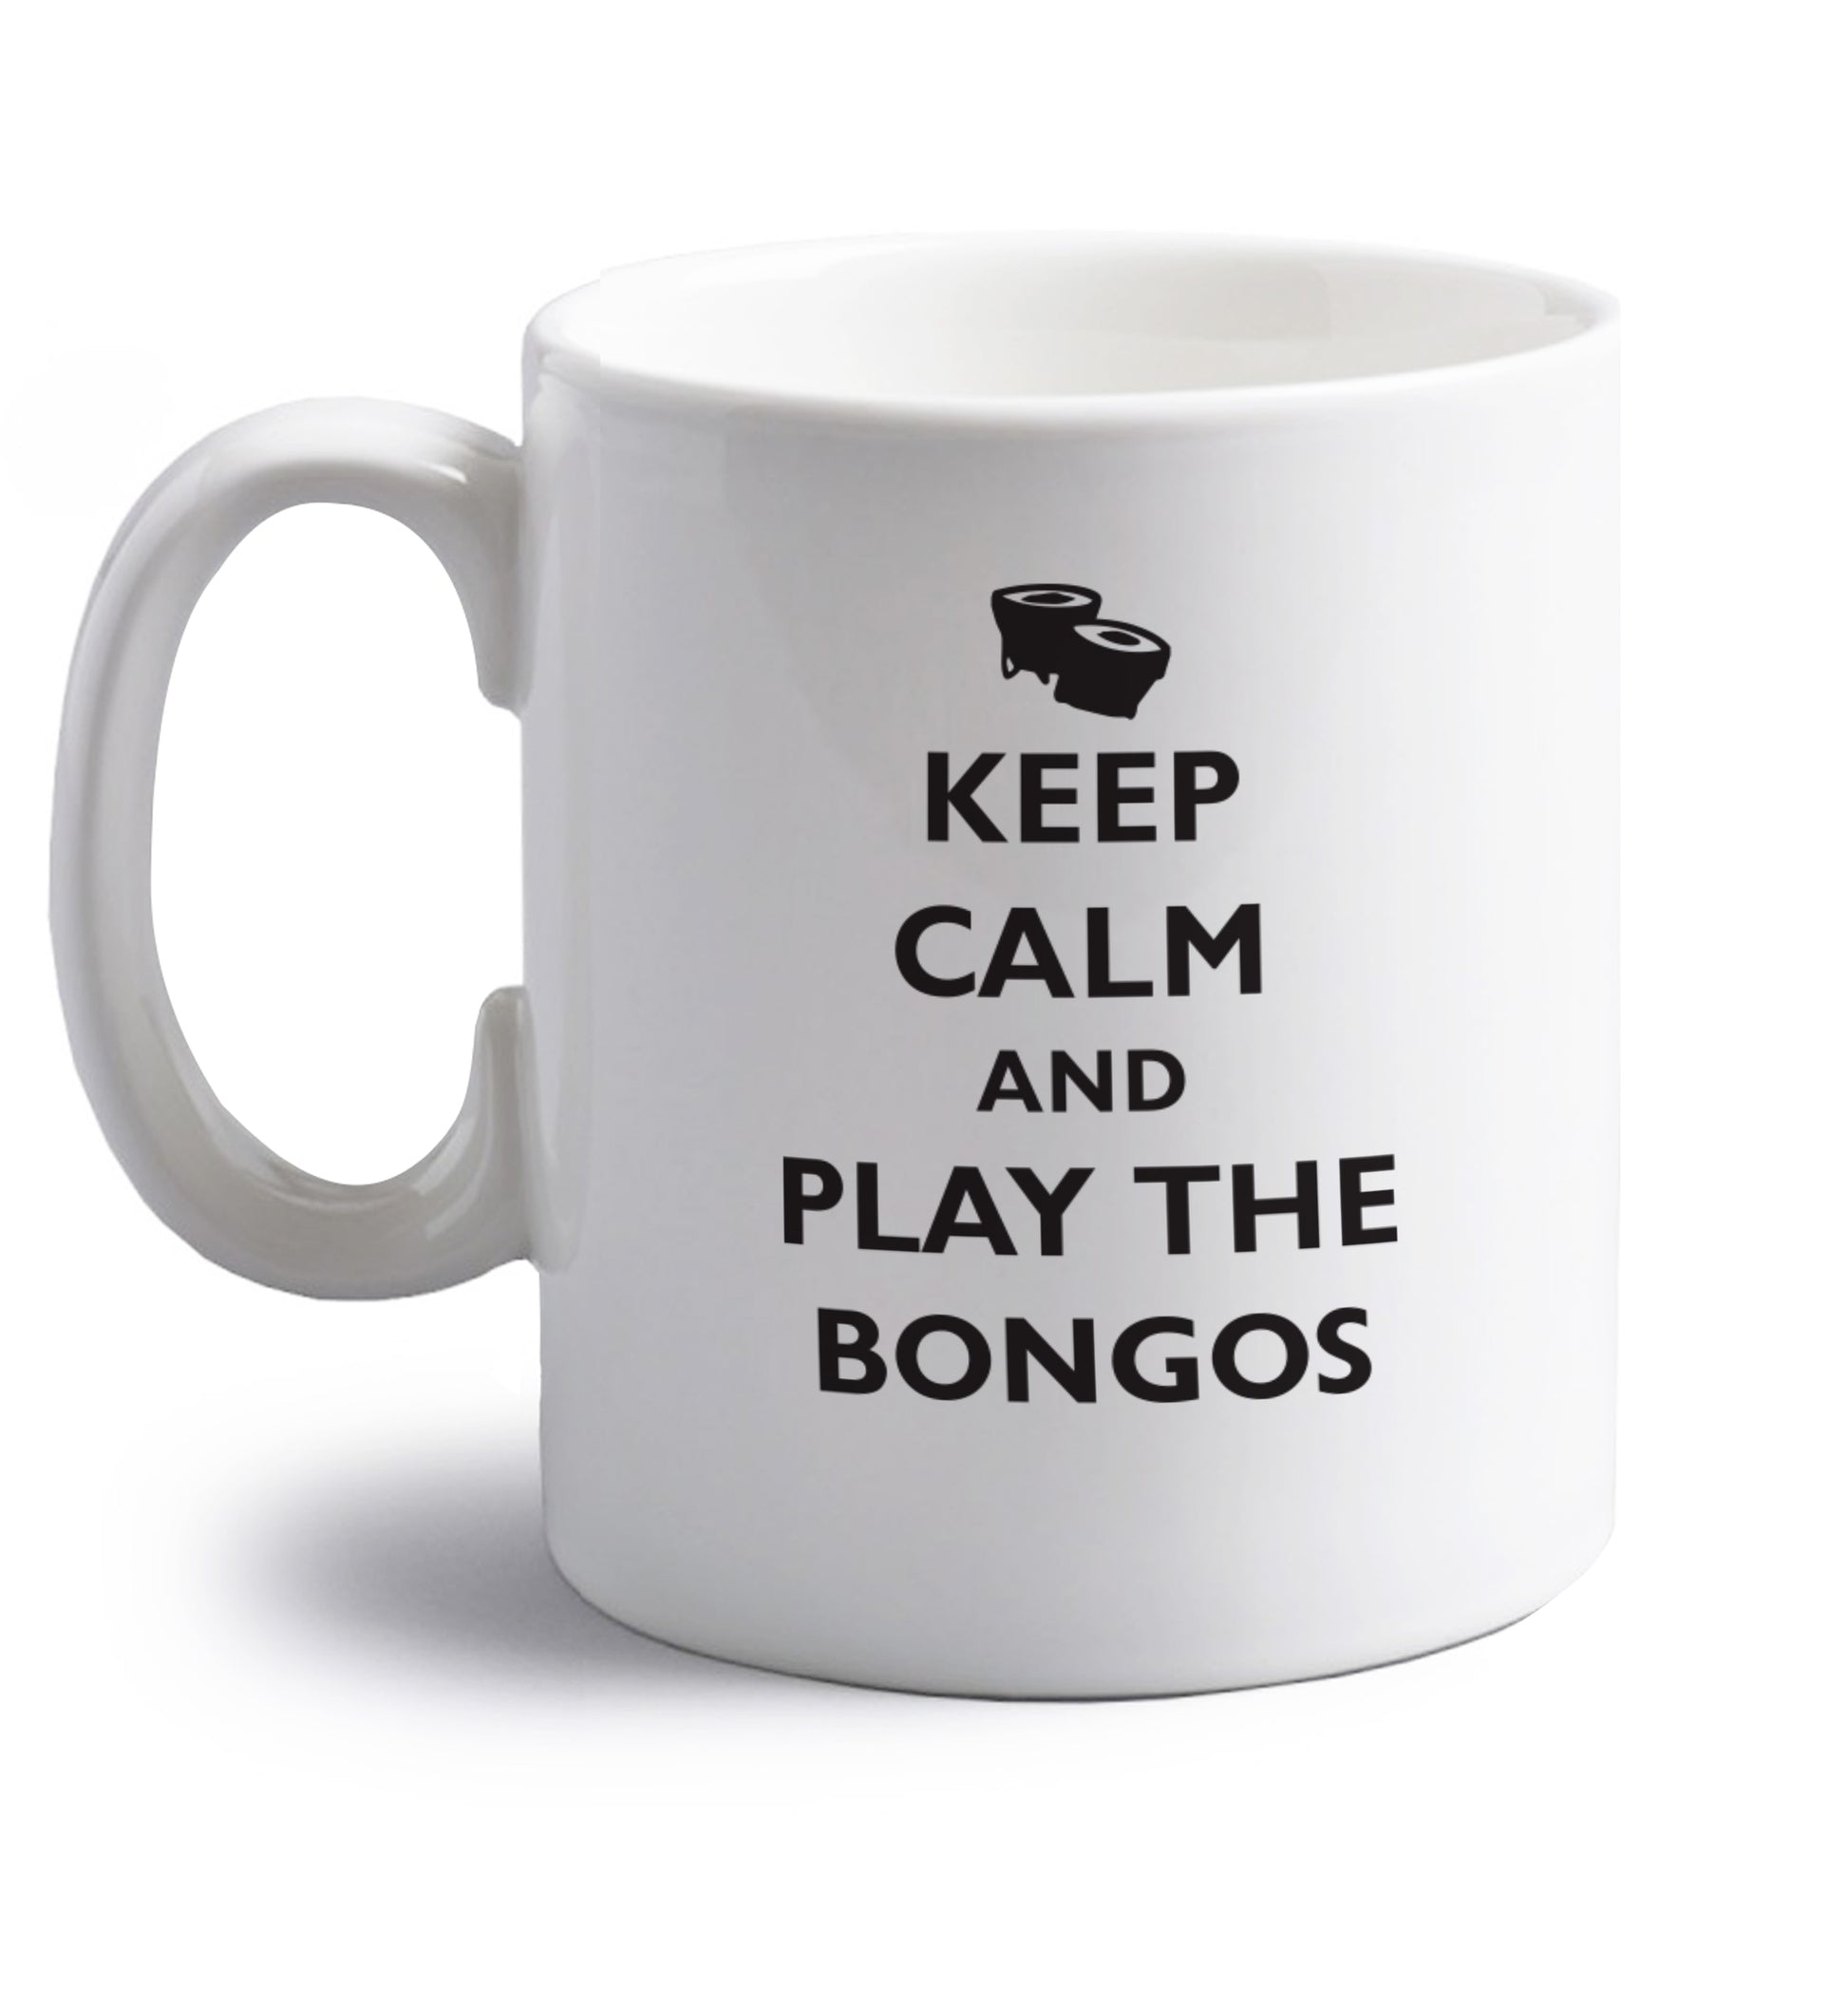 Keep calm and play the bongos right handed white ceramic mug 